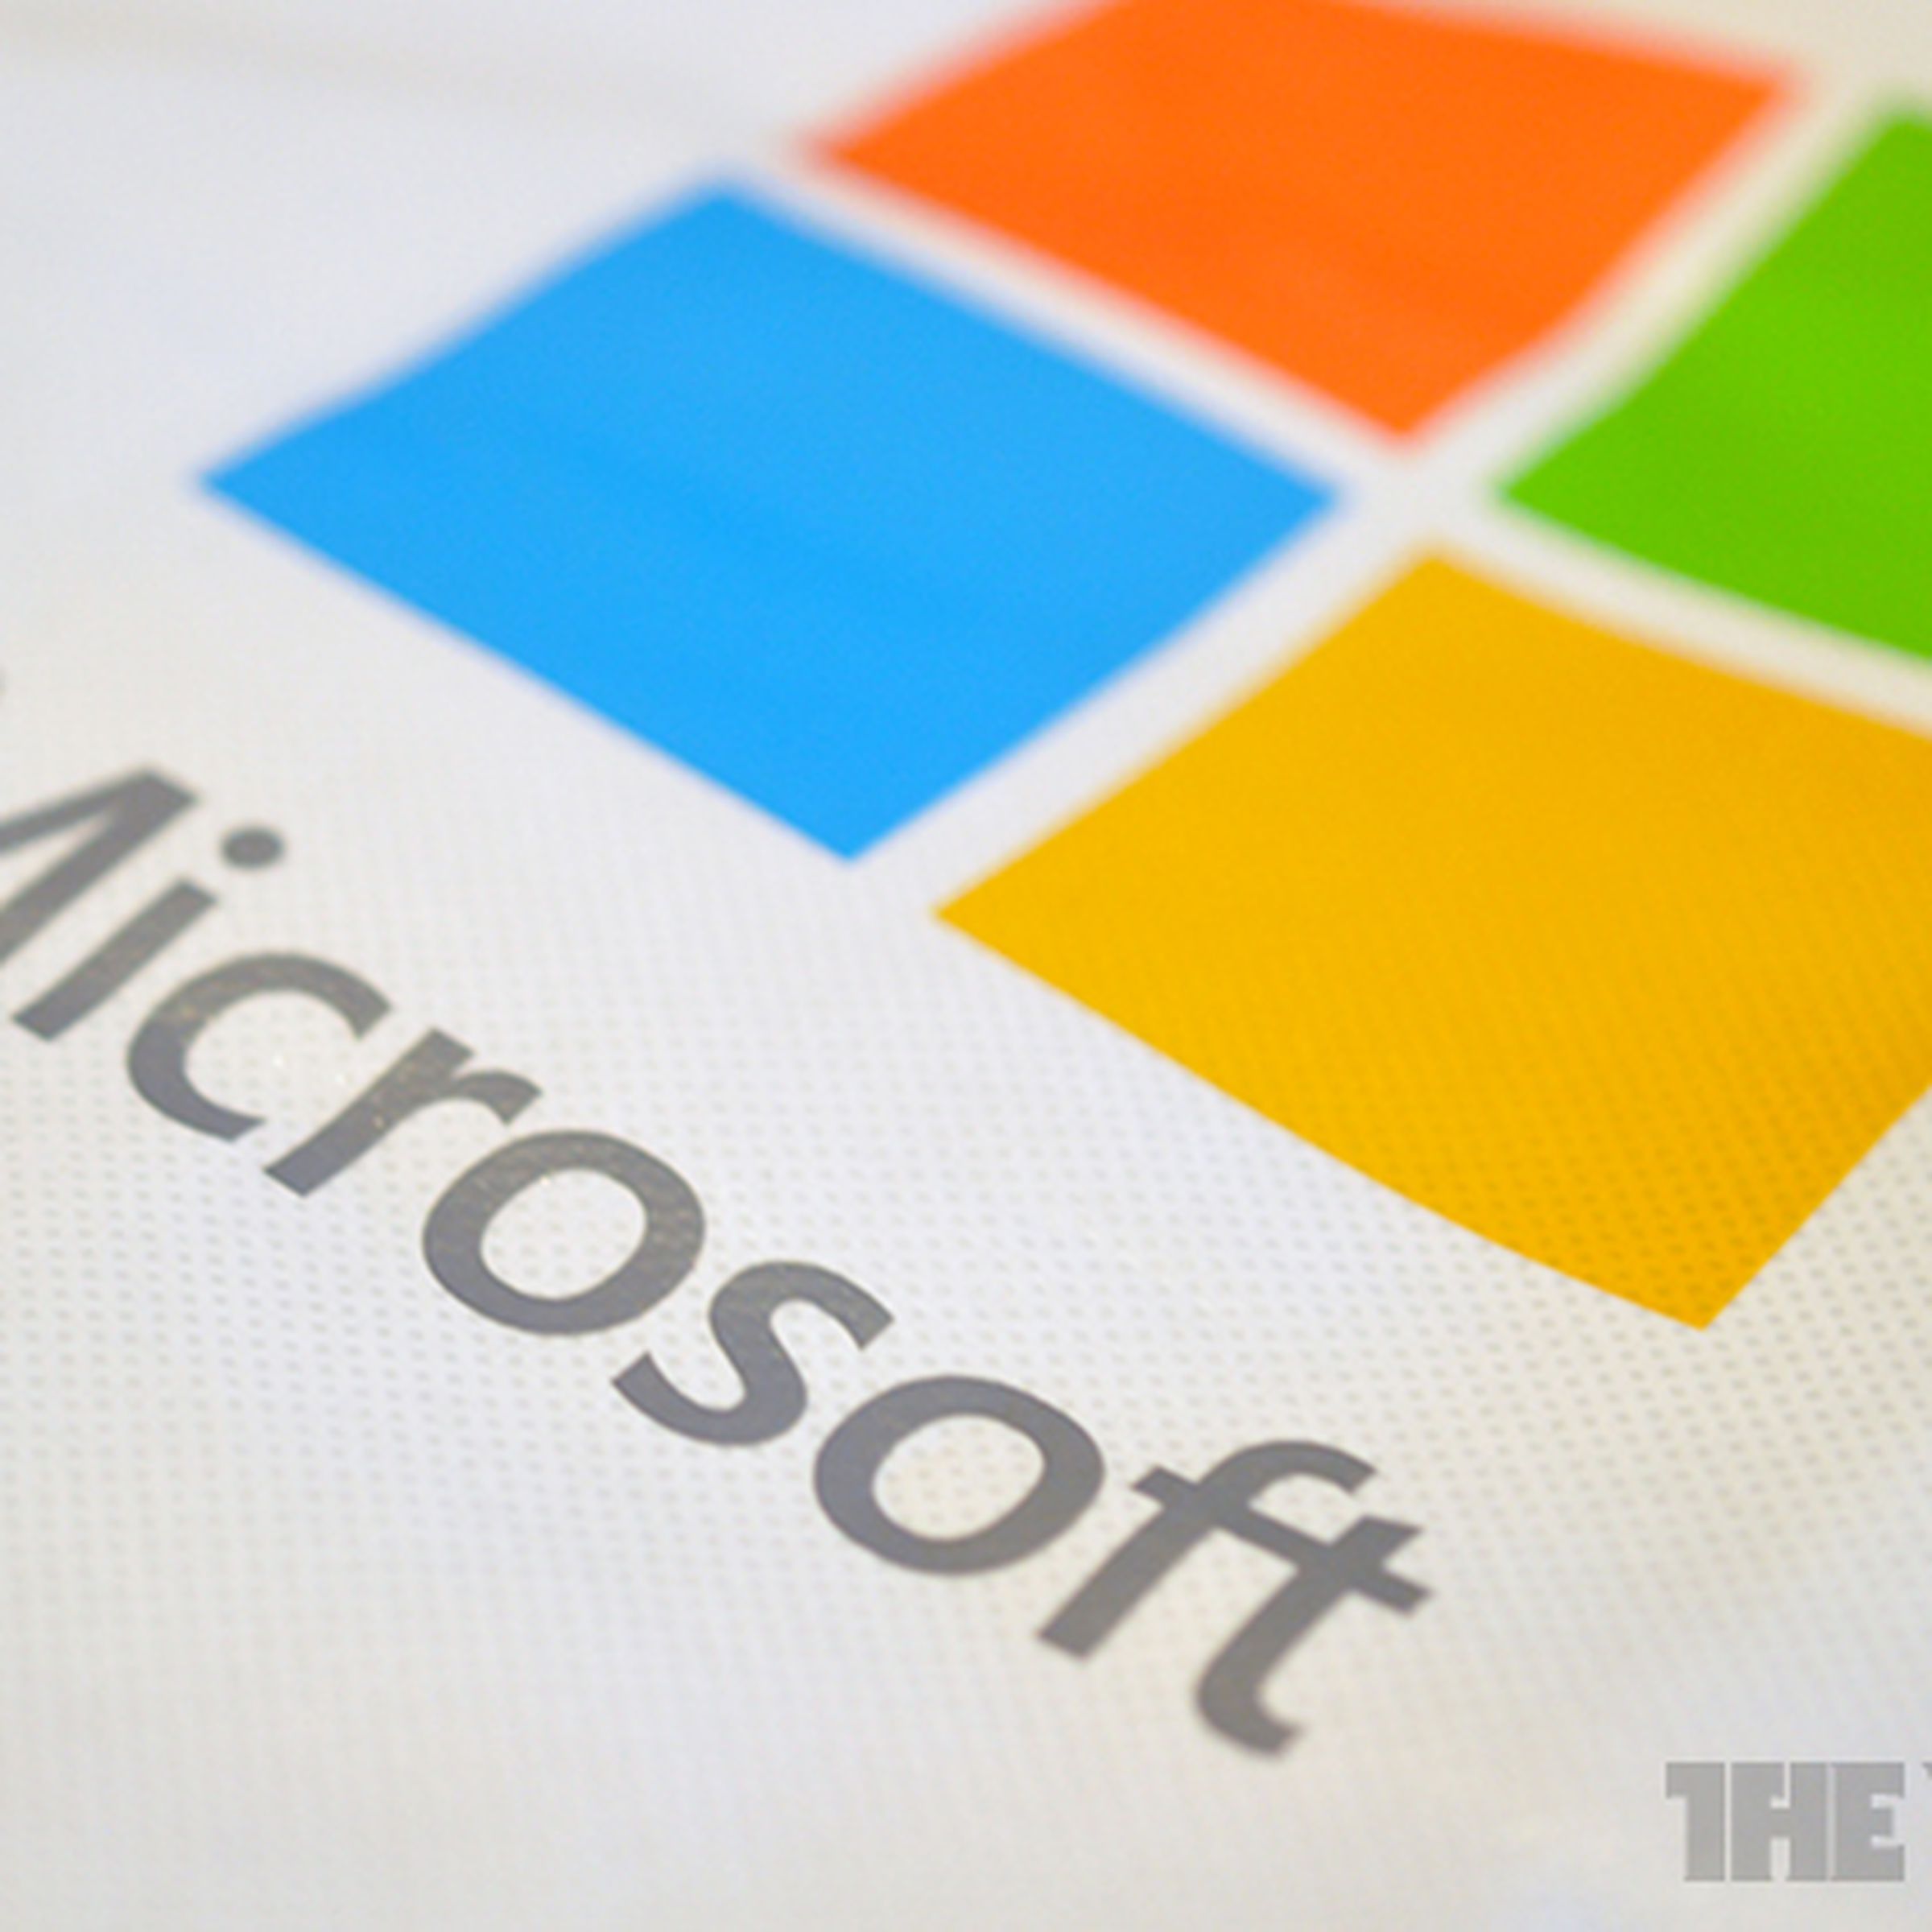 New Microsoft Logo stock